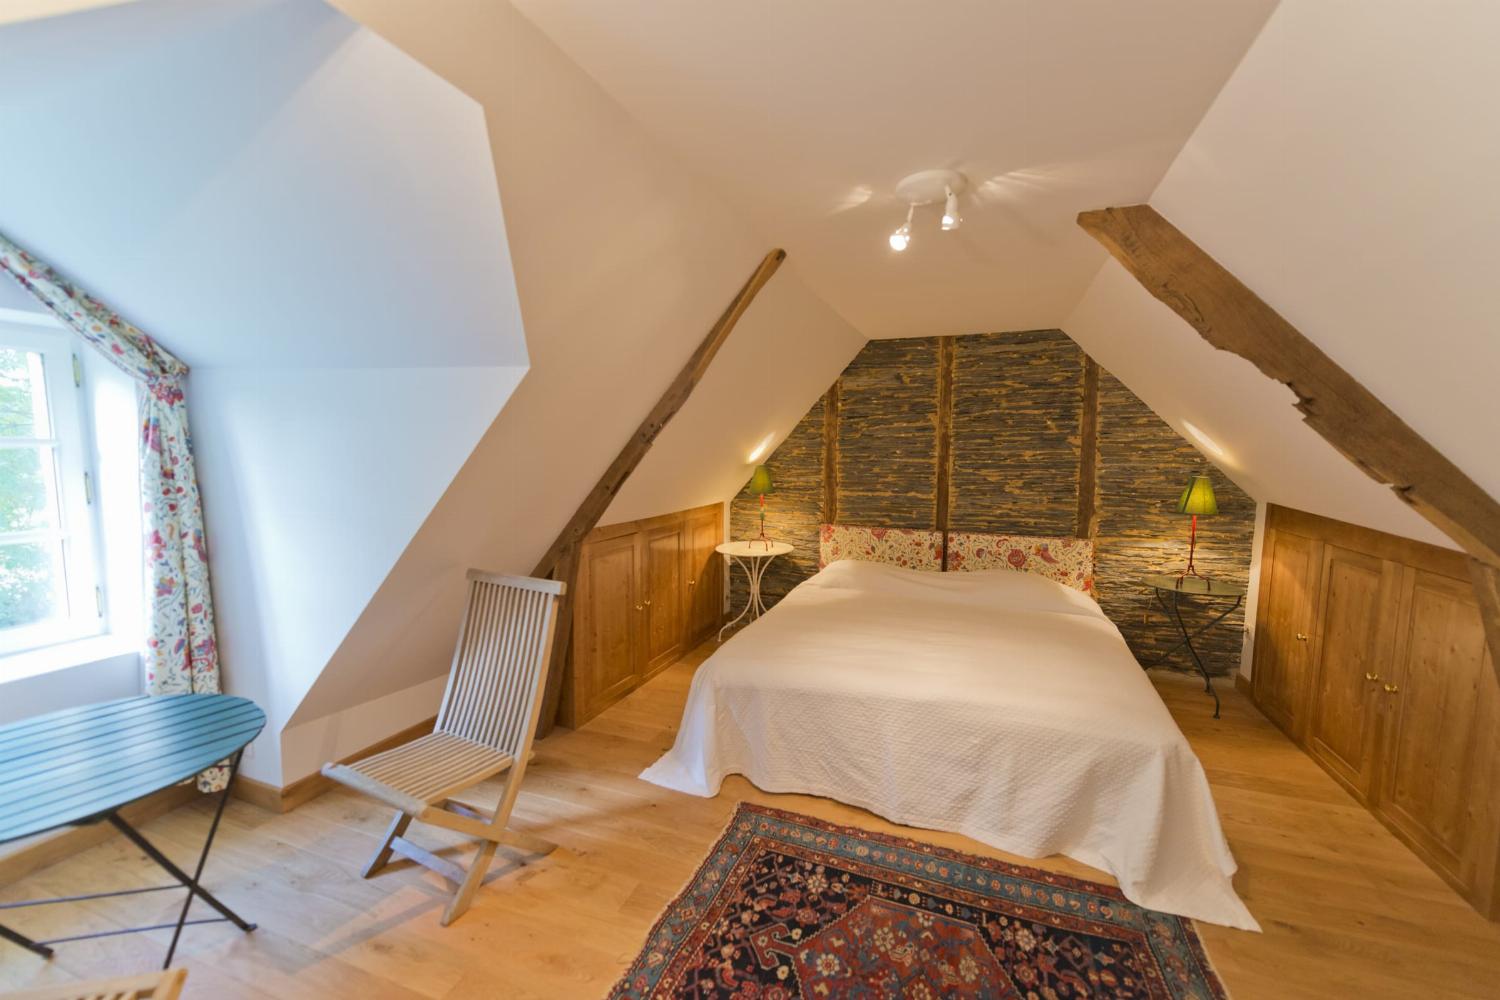 Bedroom | Rental home in Loire